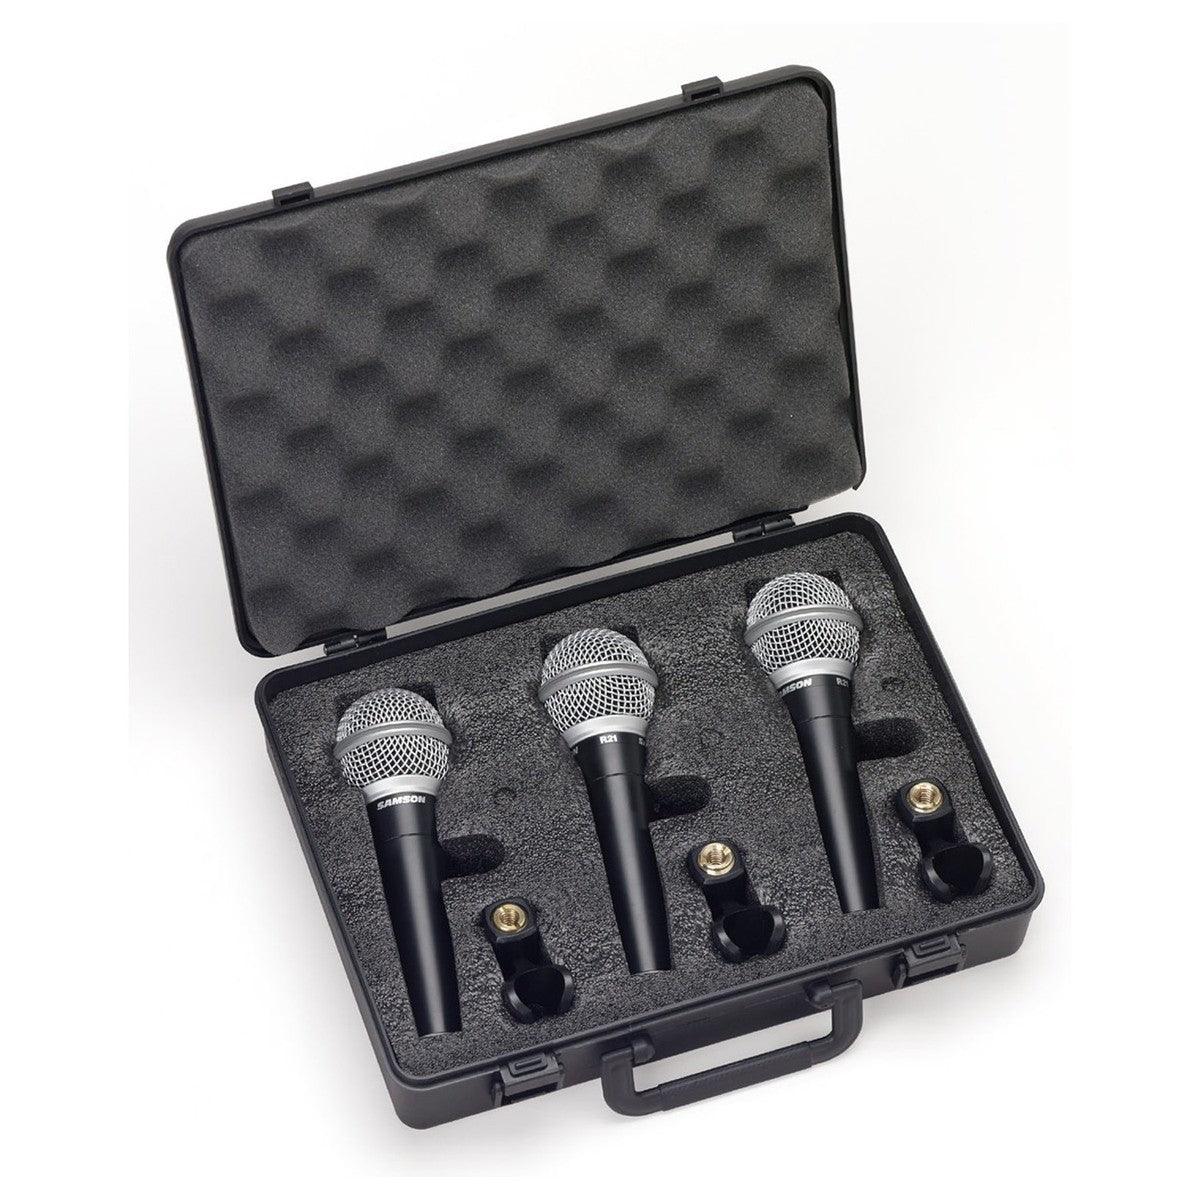 Samson R21 Cardiod Dynamic Microphone 3 Pack - DY Pro Audio